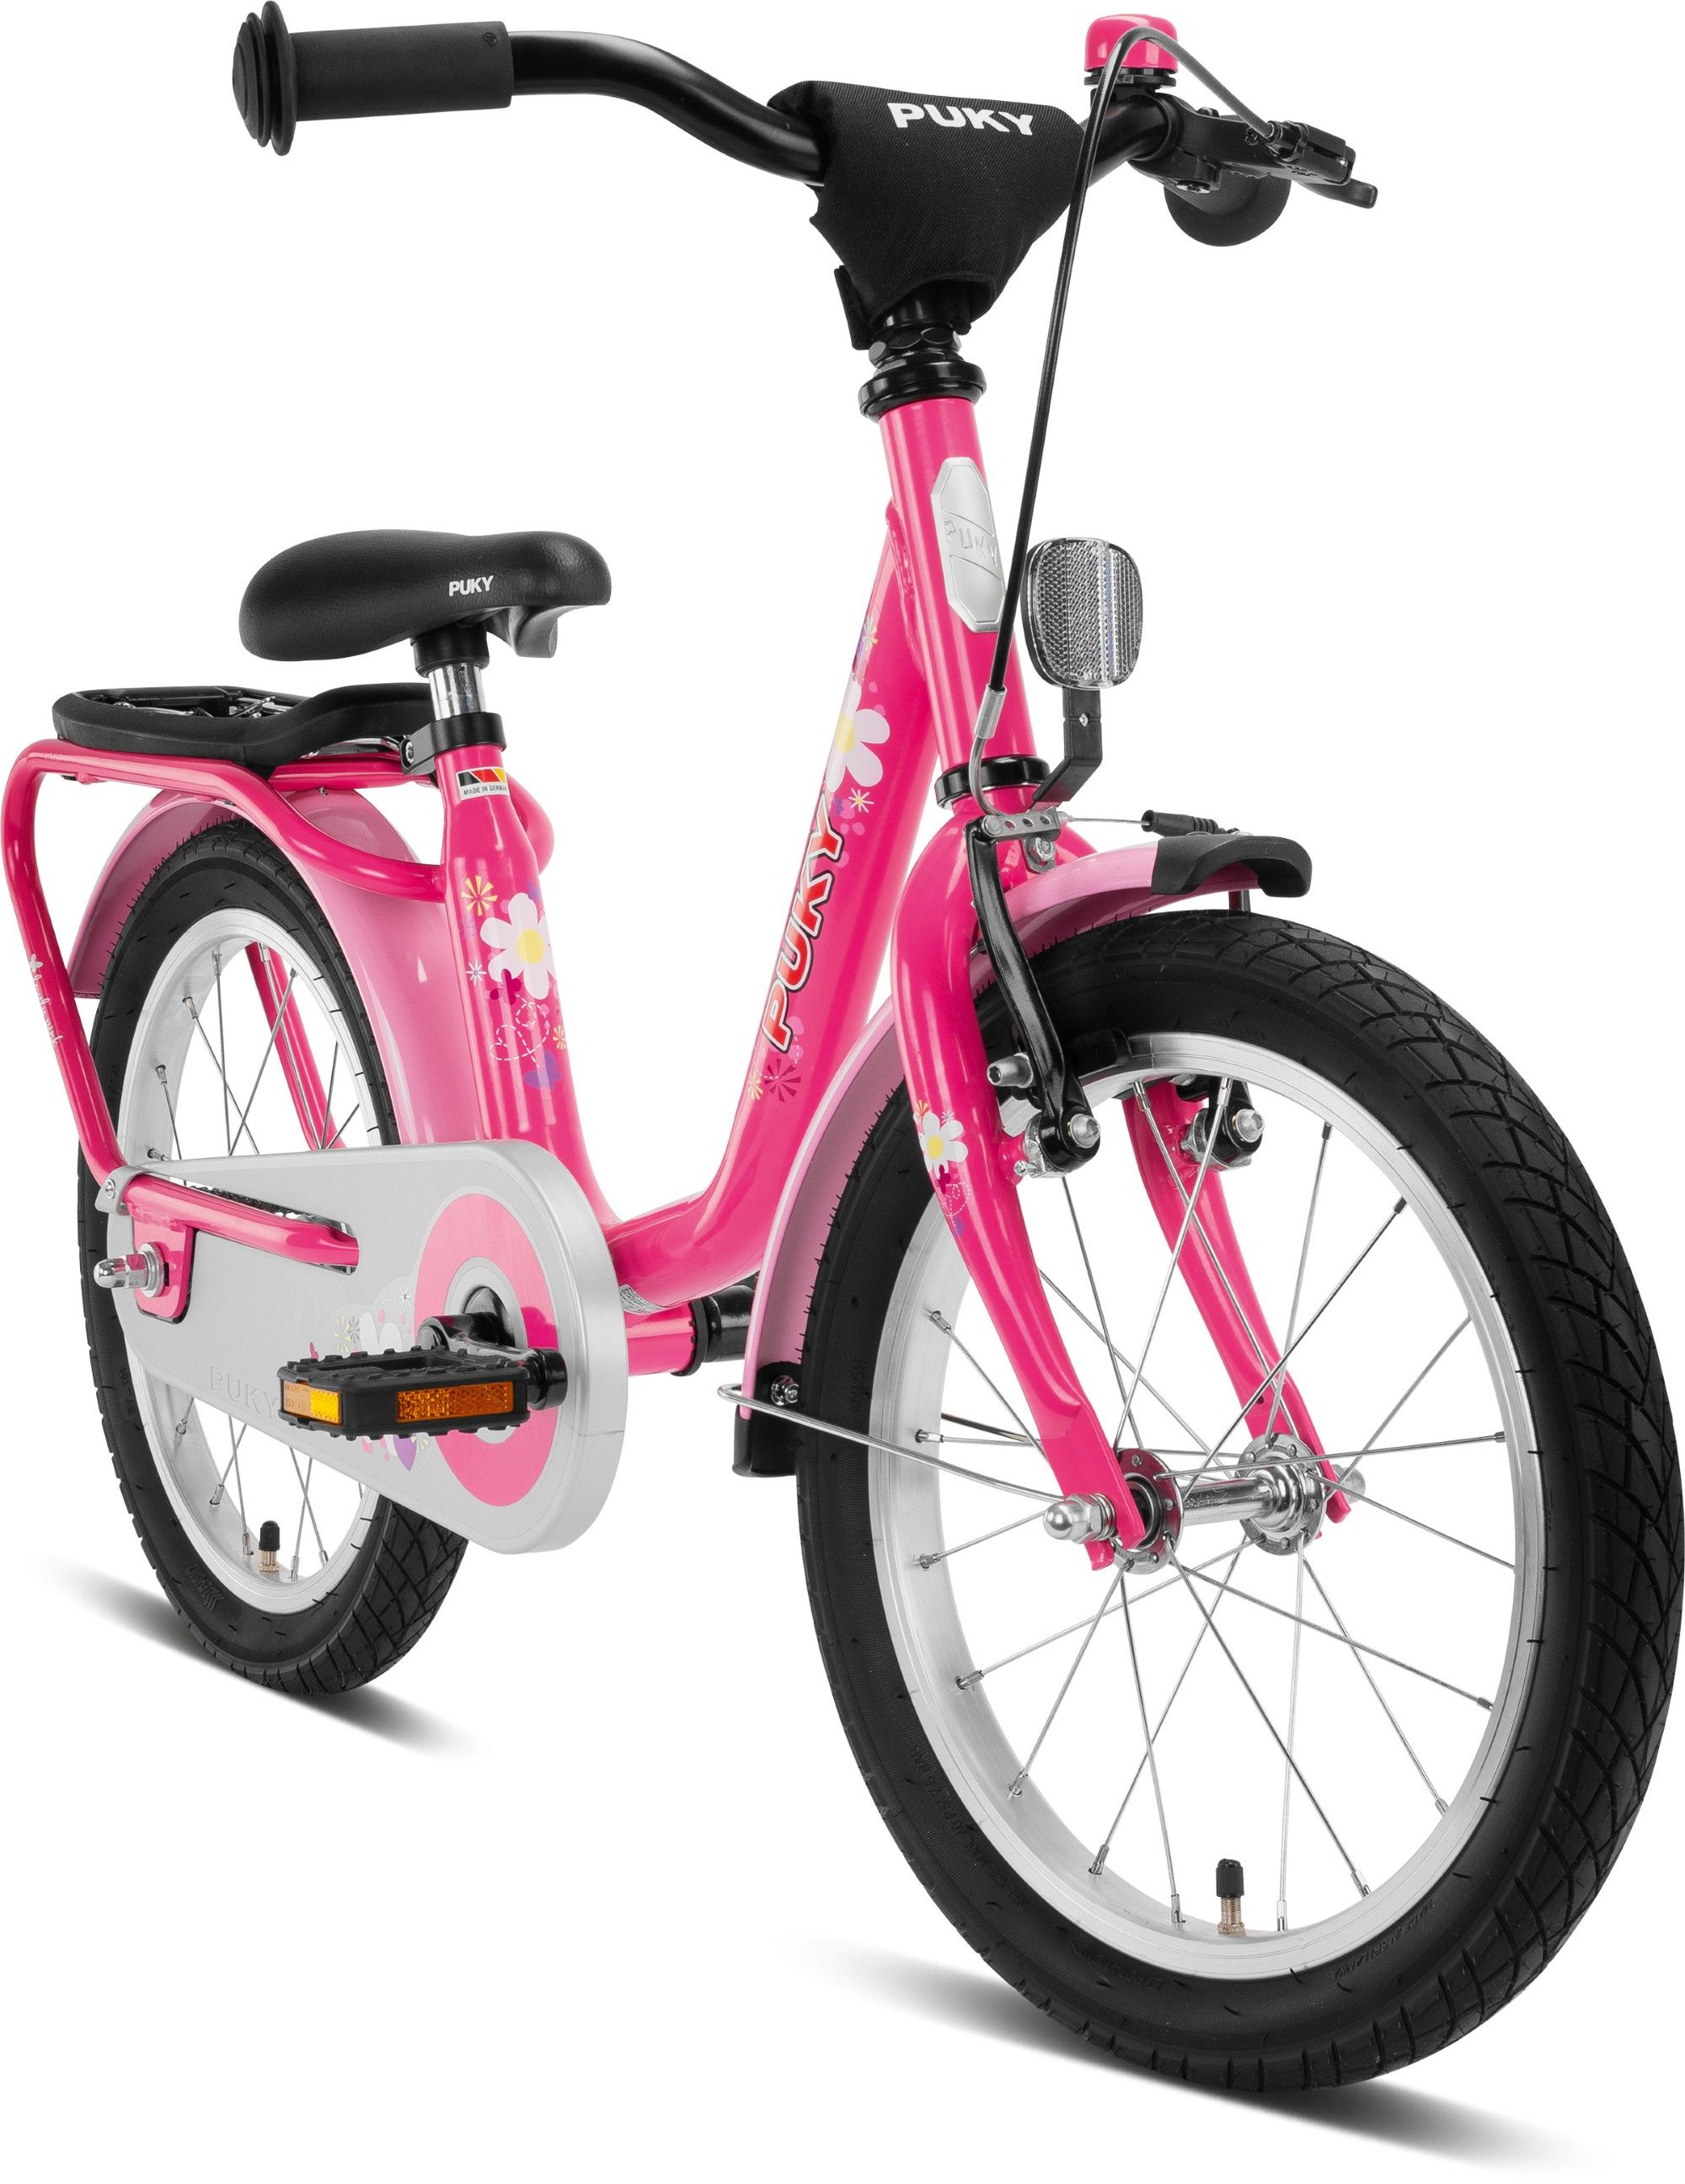 Puky STEEL 16 lovely pink - Fahrrad Online Shop